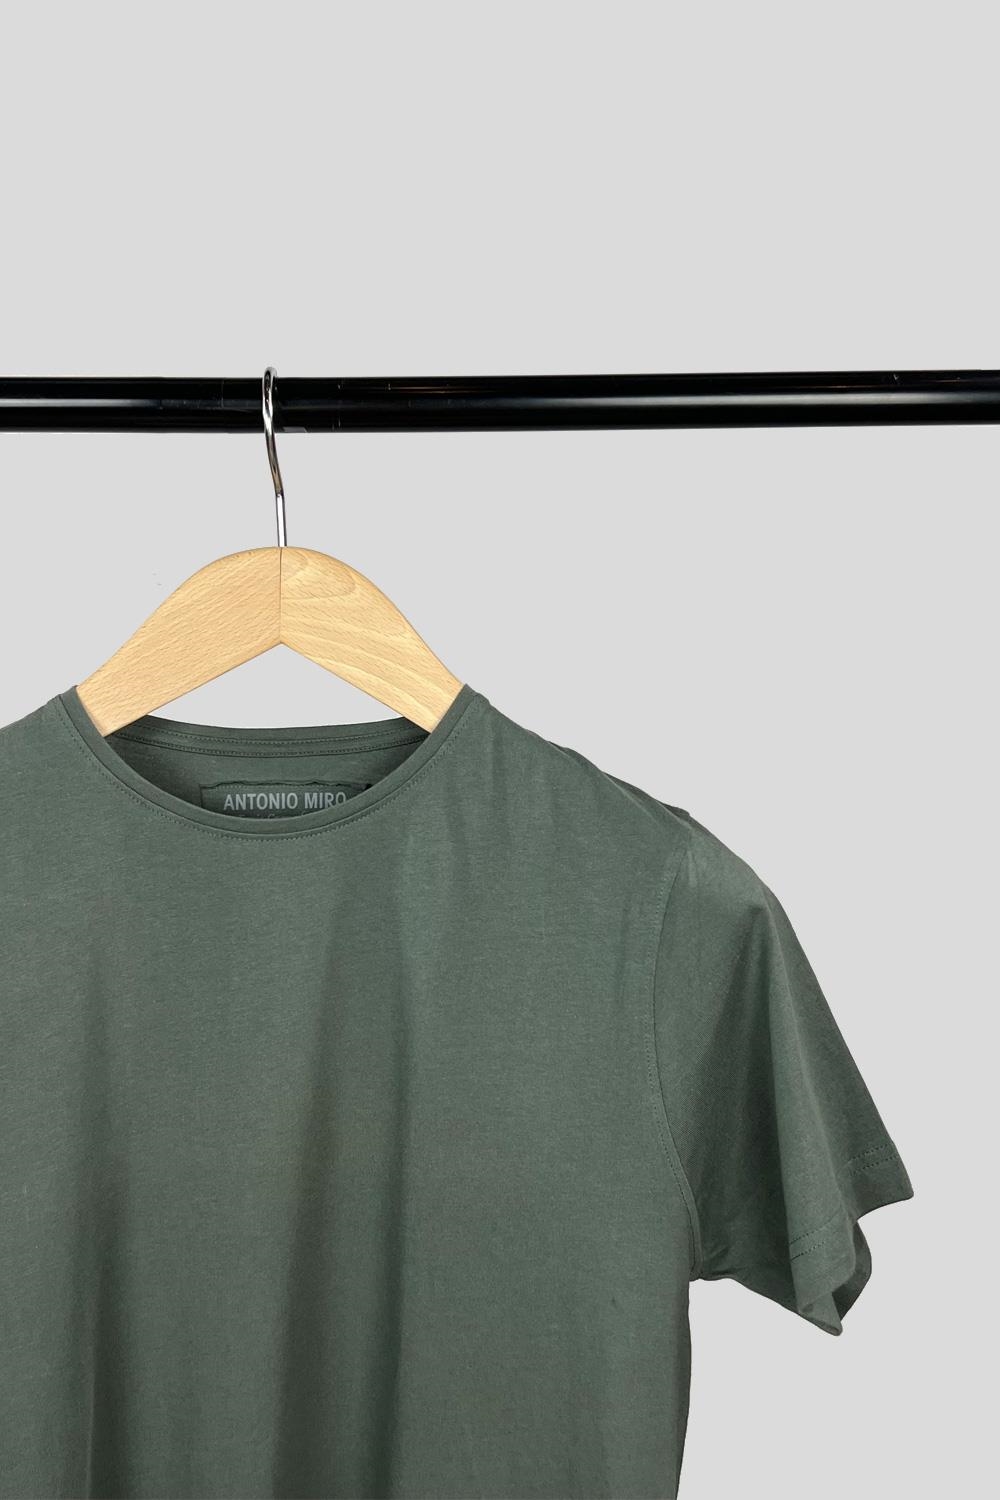 Camiseta básica manga corta - varios colores | 1704HSLC00 | Cupón 4x3: CAMISETAS